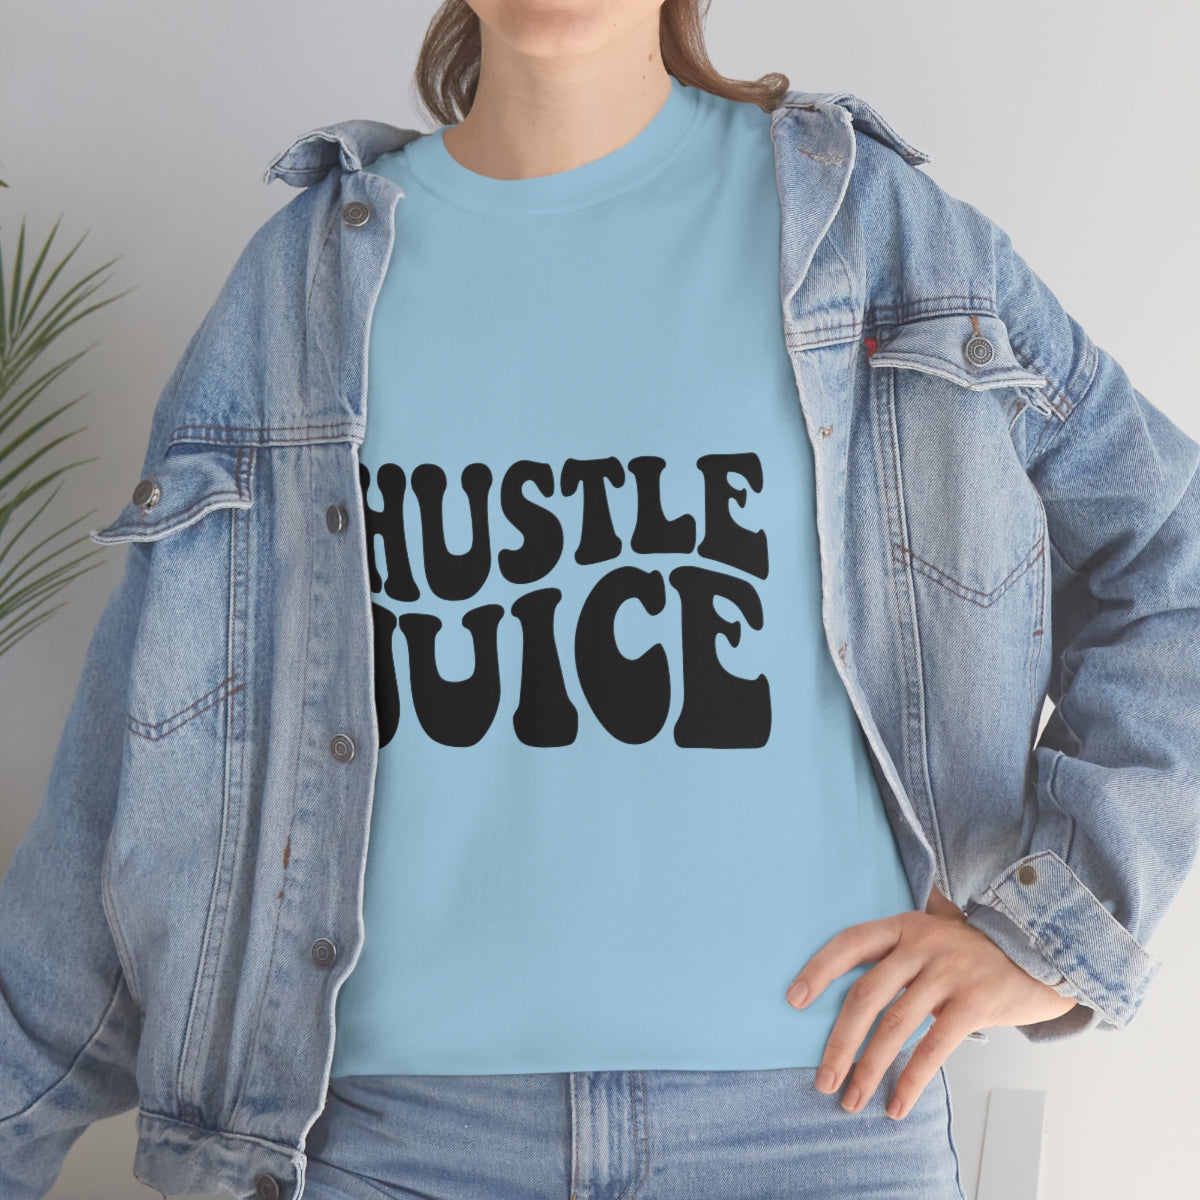 Hussle Juice Unisex Heavy Cotton Tee